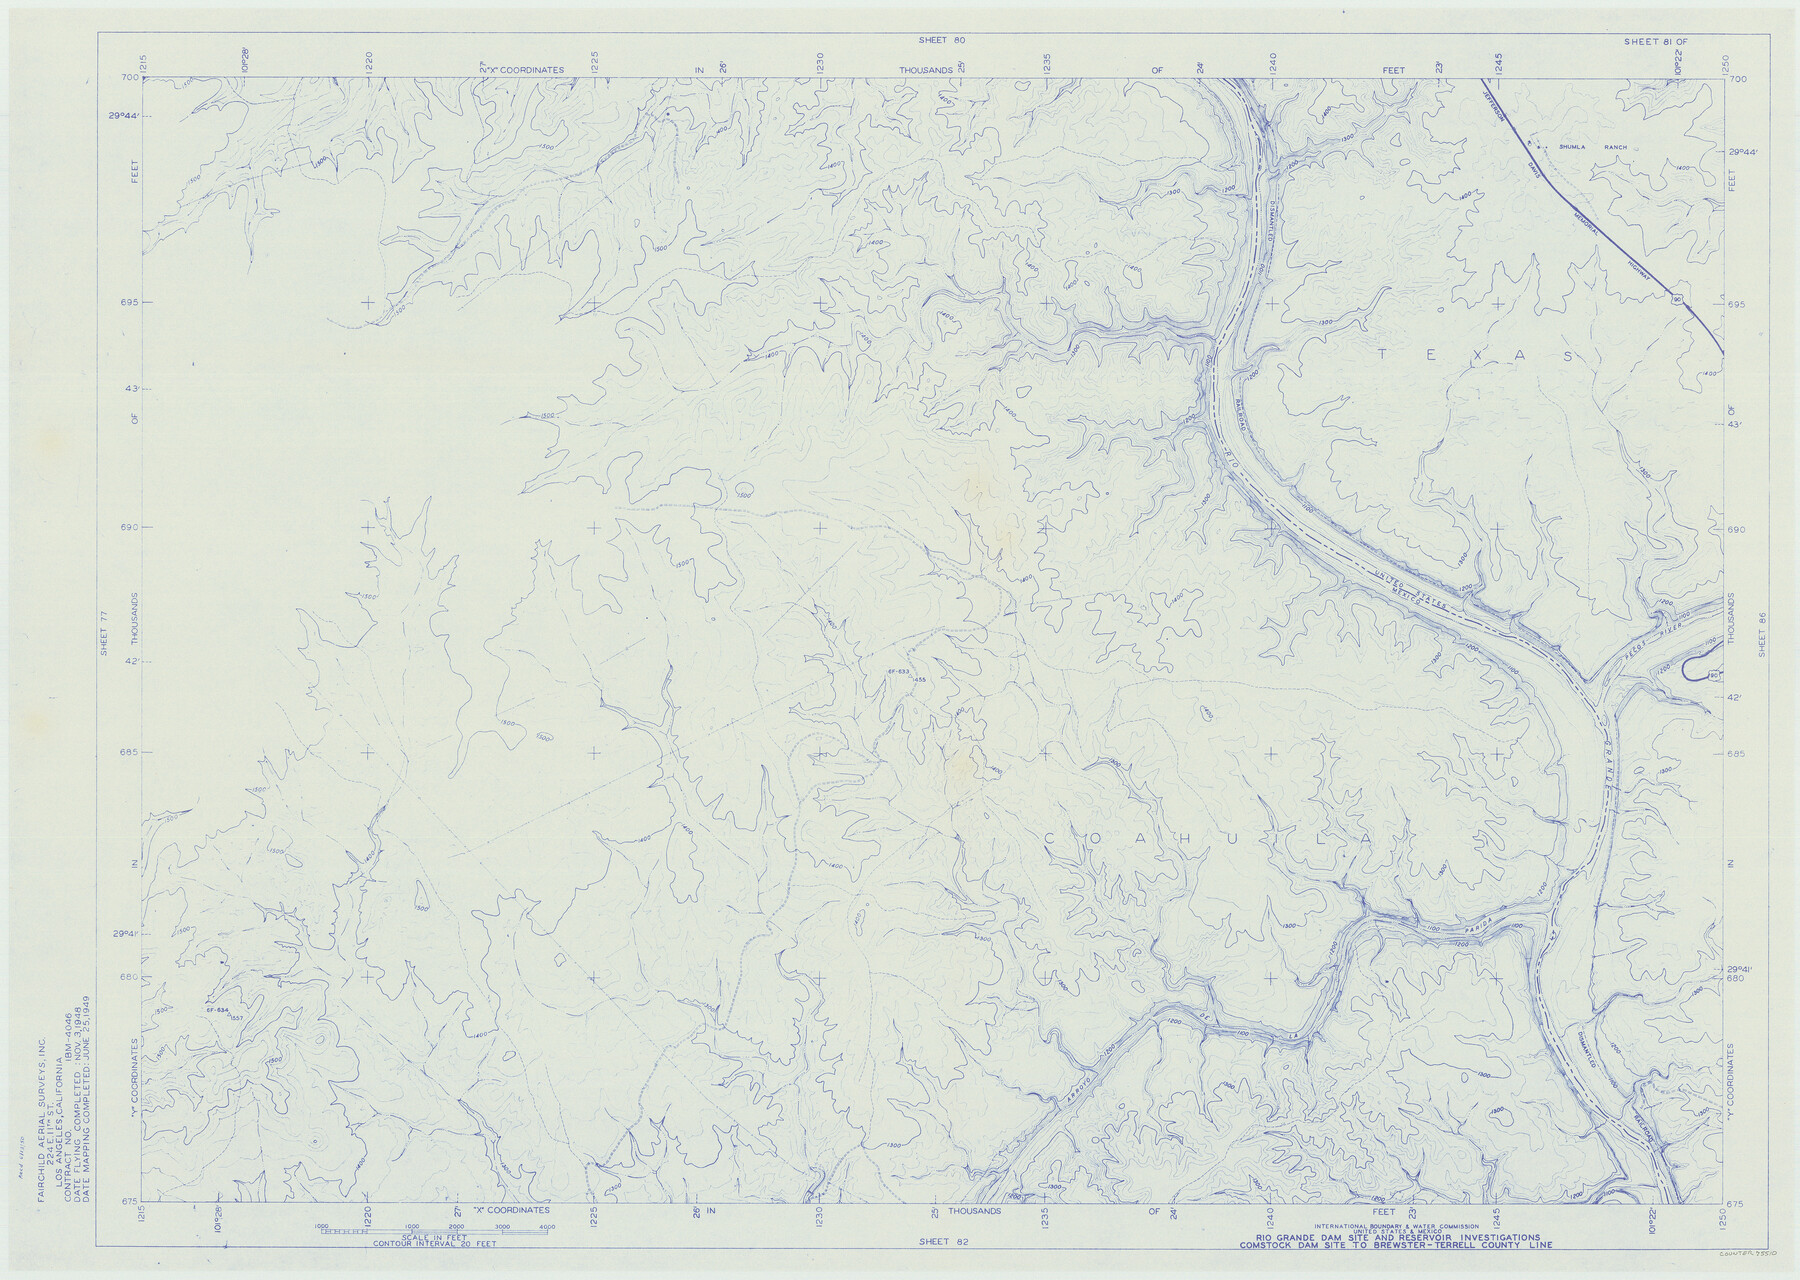 75510, Amistad International Reservoir on Rio Grande 81, General Map Collection